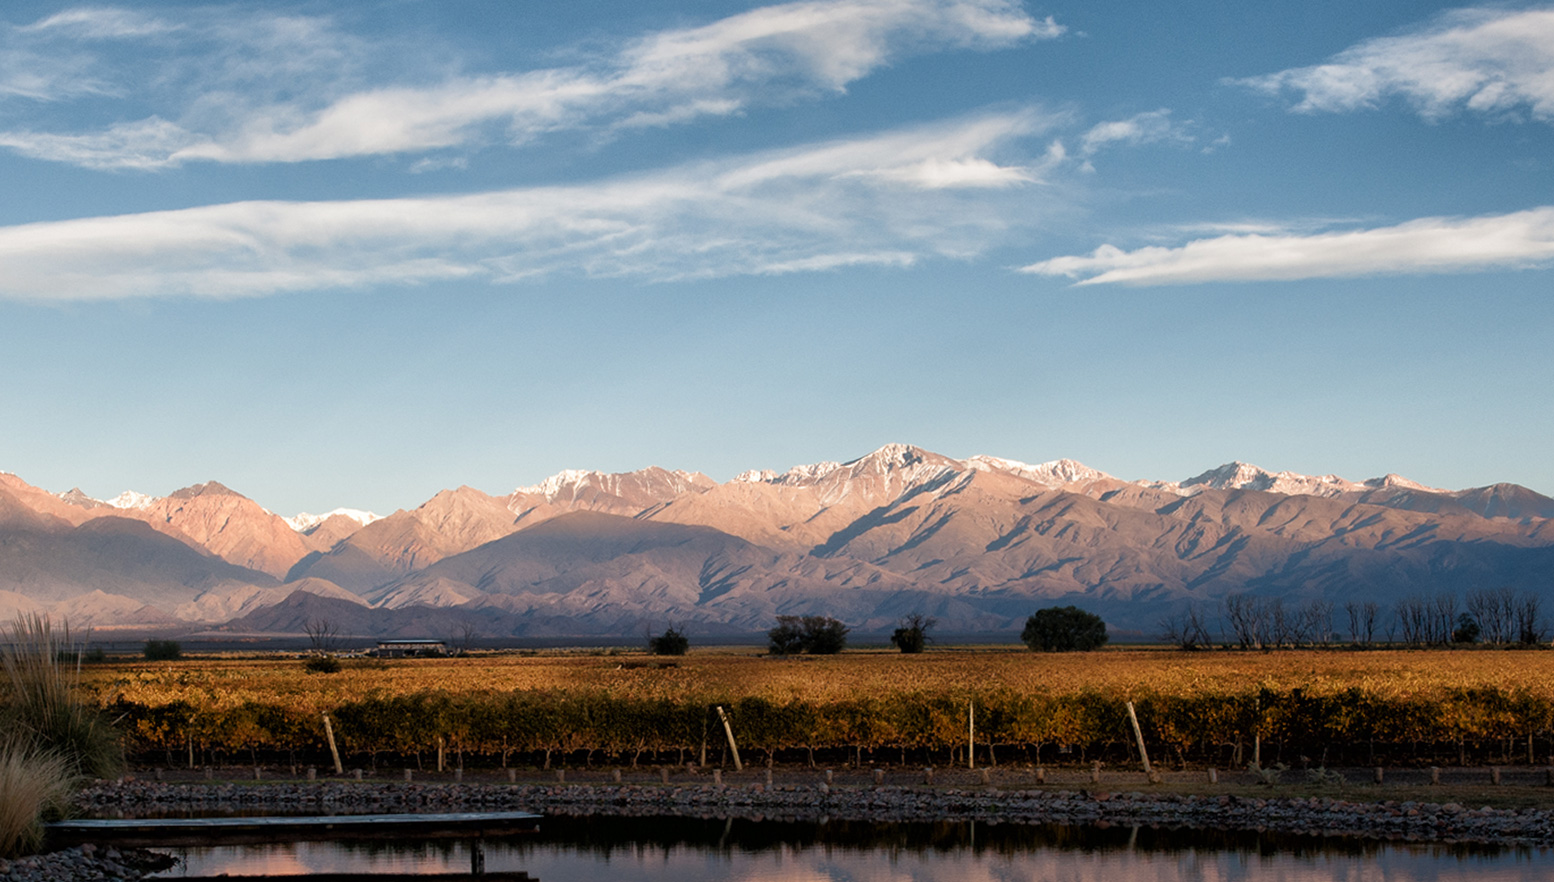 Corazon del Sol in the Uco Valley, Argentina